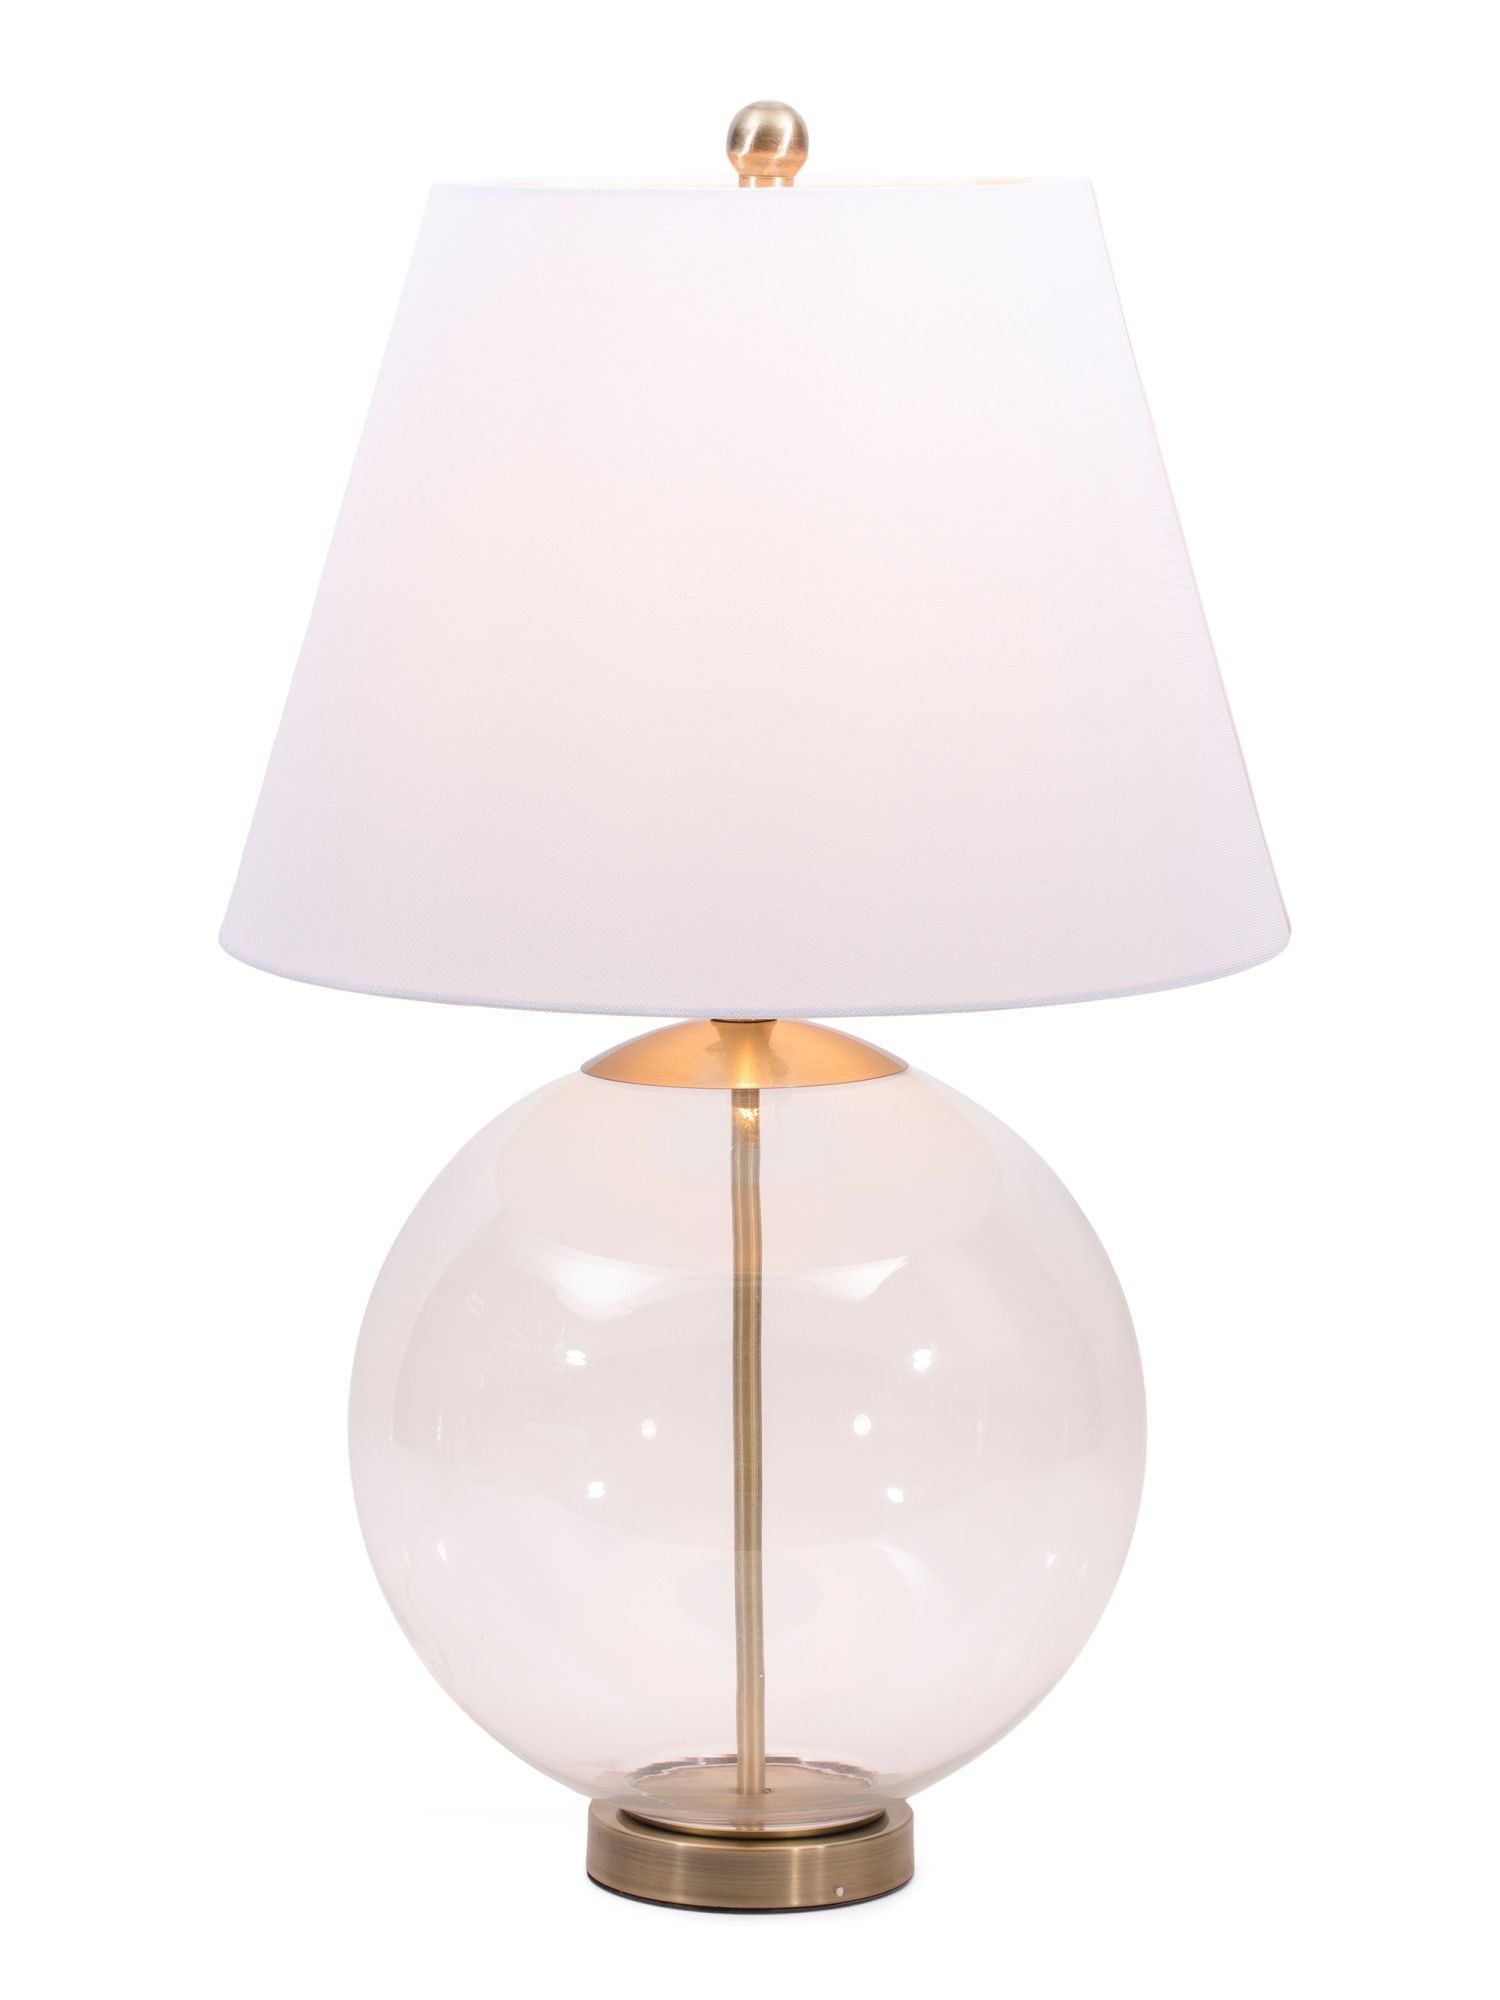 Glass Table Lamp | TJ Maxx